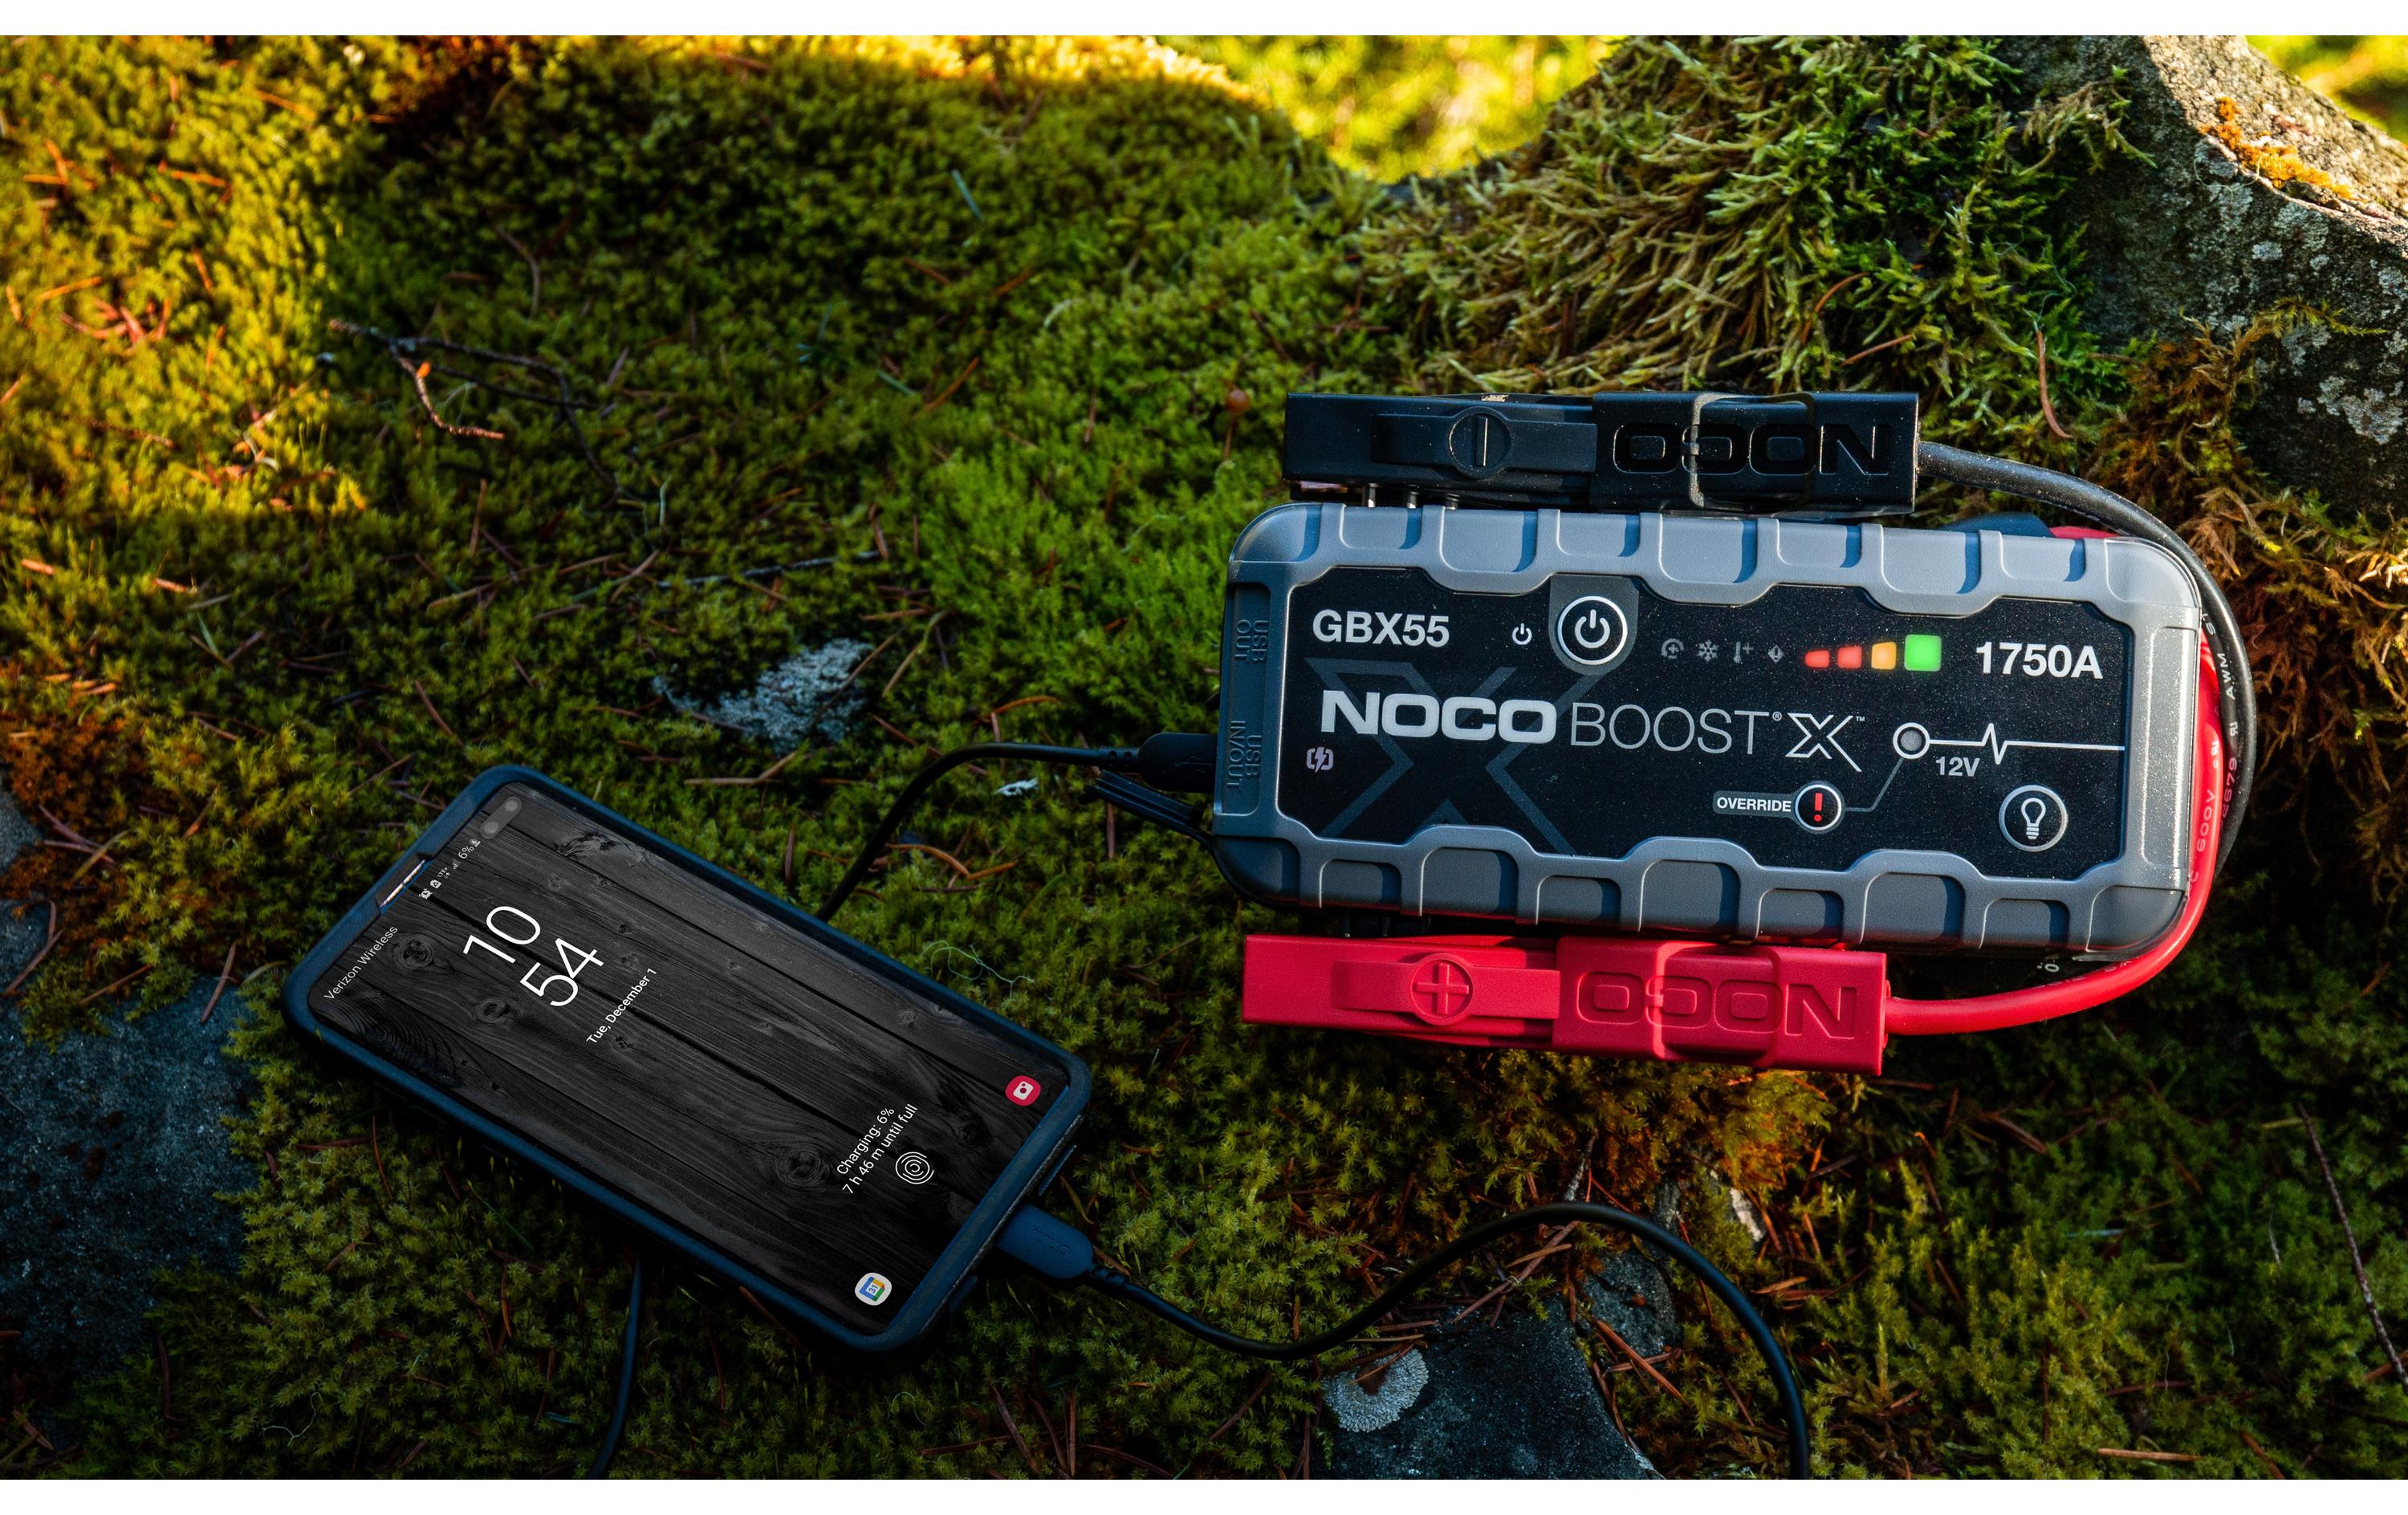 Noco Starterbatterie mit Ladefunktion GBX55 12 V, 1750 A